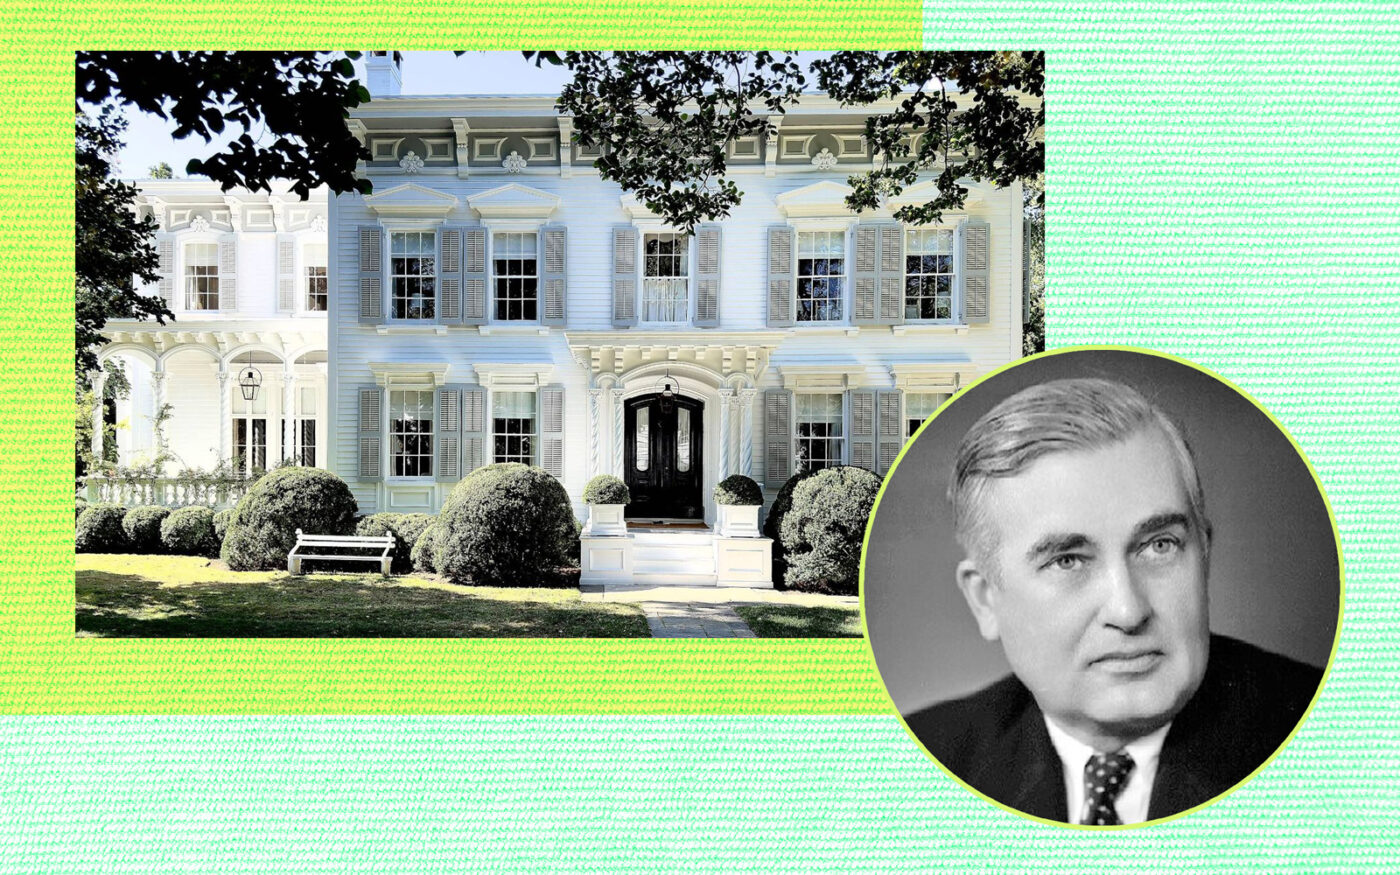 Thomas Edison Scion’s Sag Harbor Home Listed for $19 Million